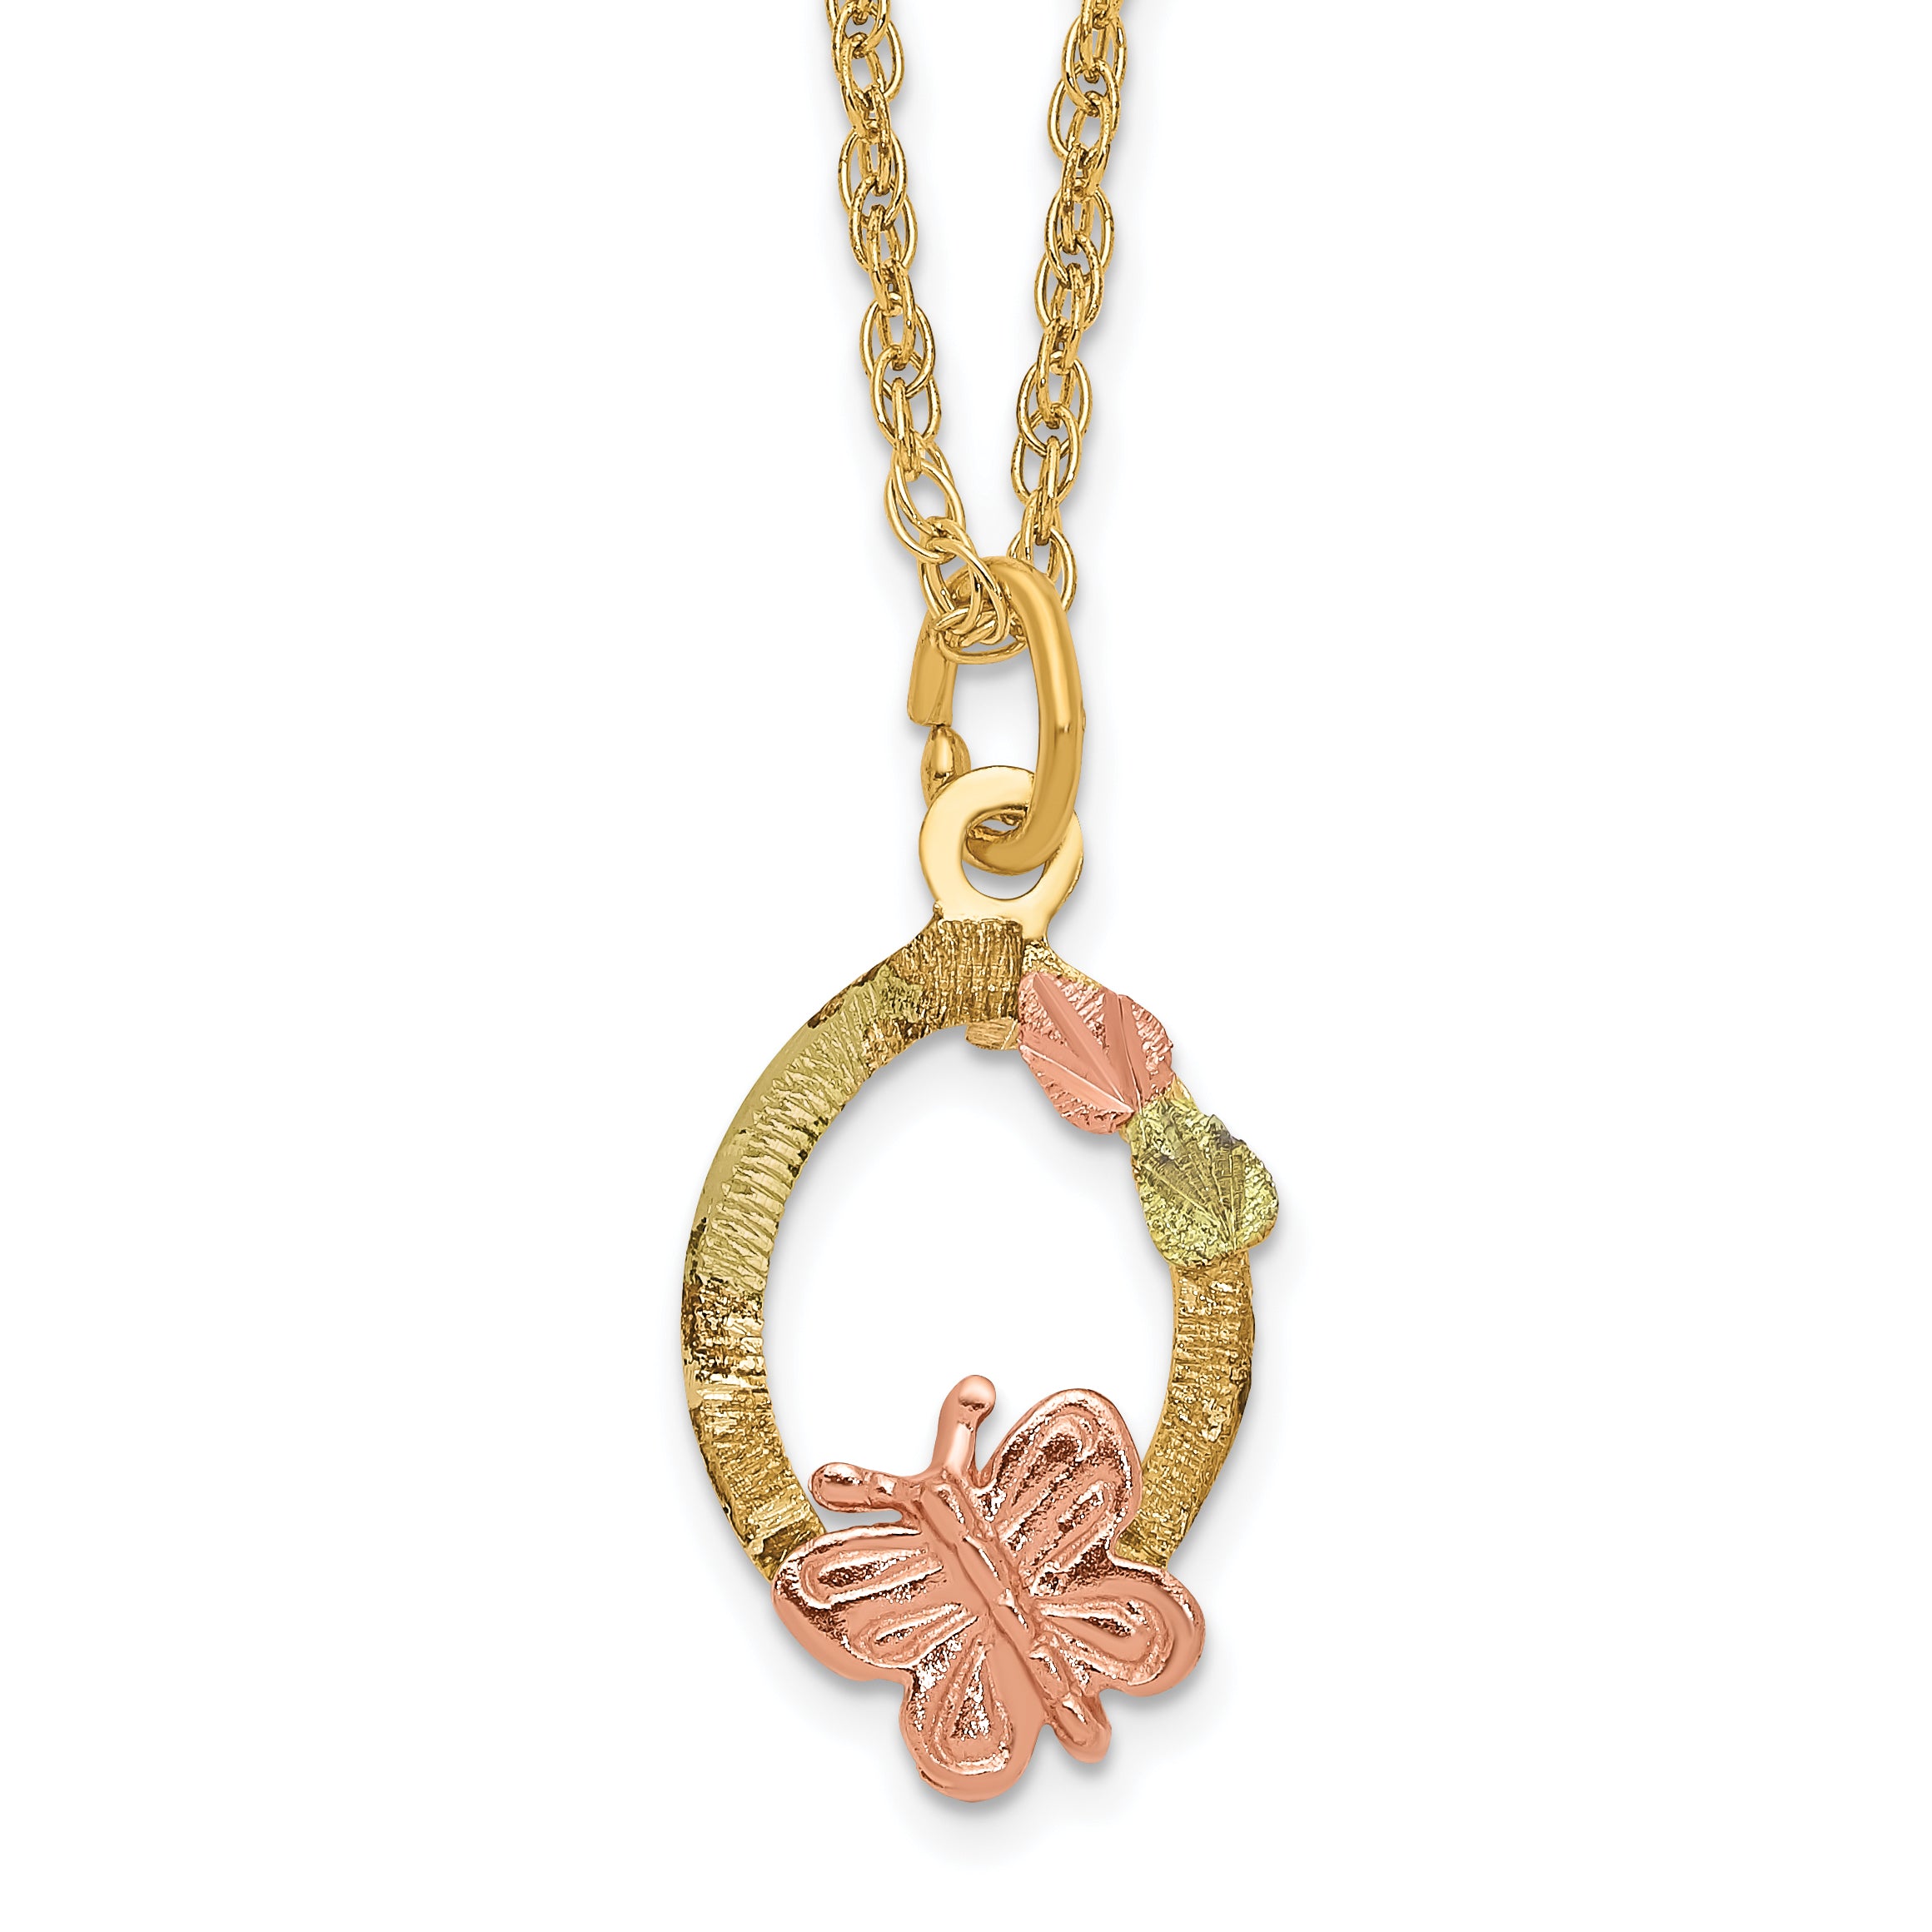 10k Tri-Color Black Hills Gold Butterfly Necklace